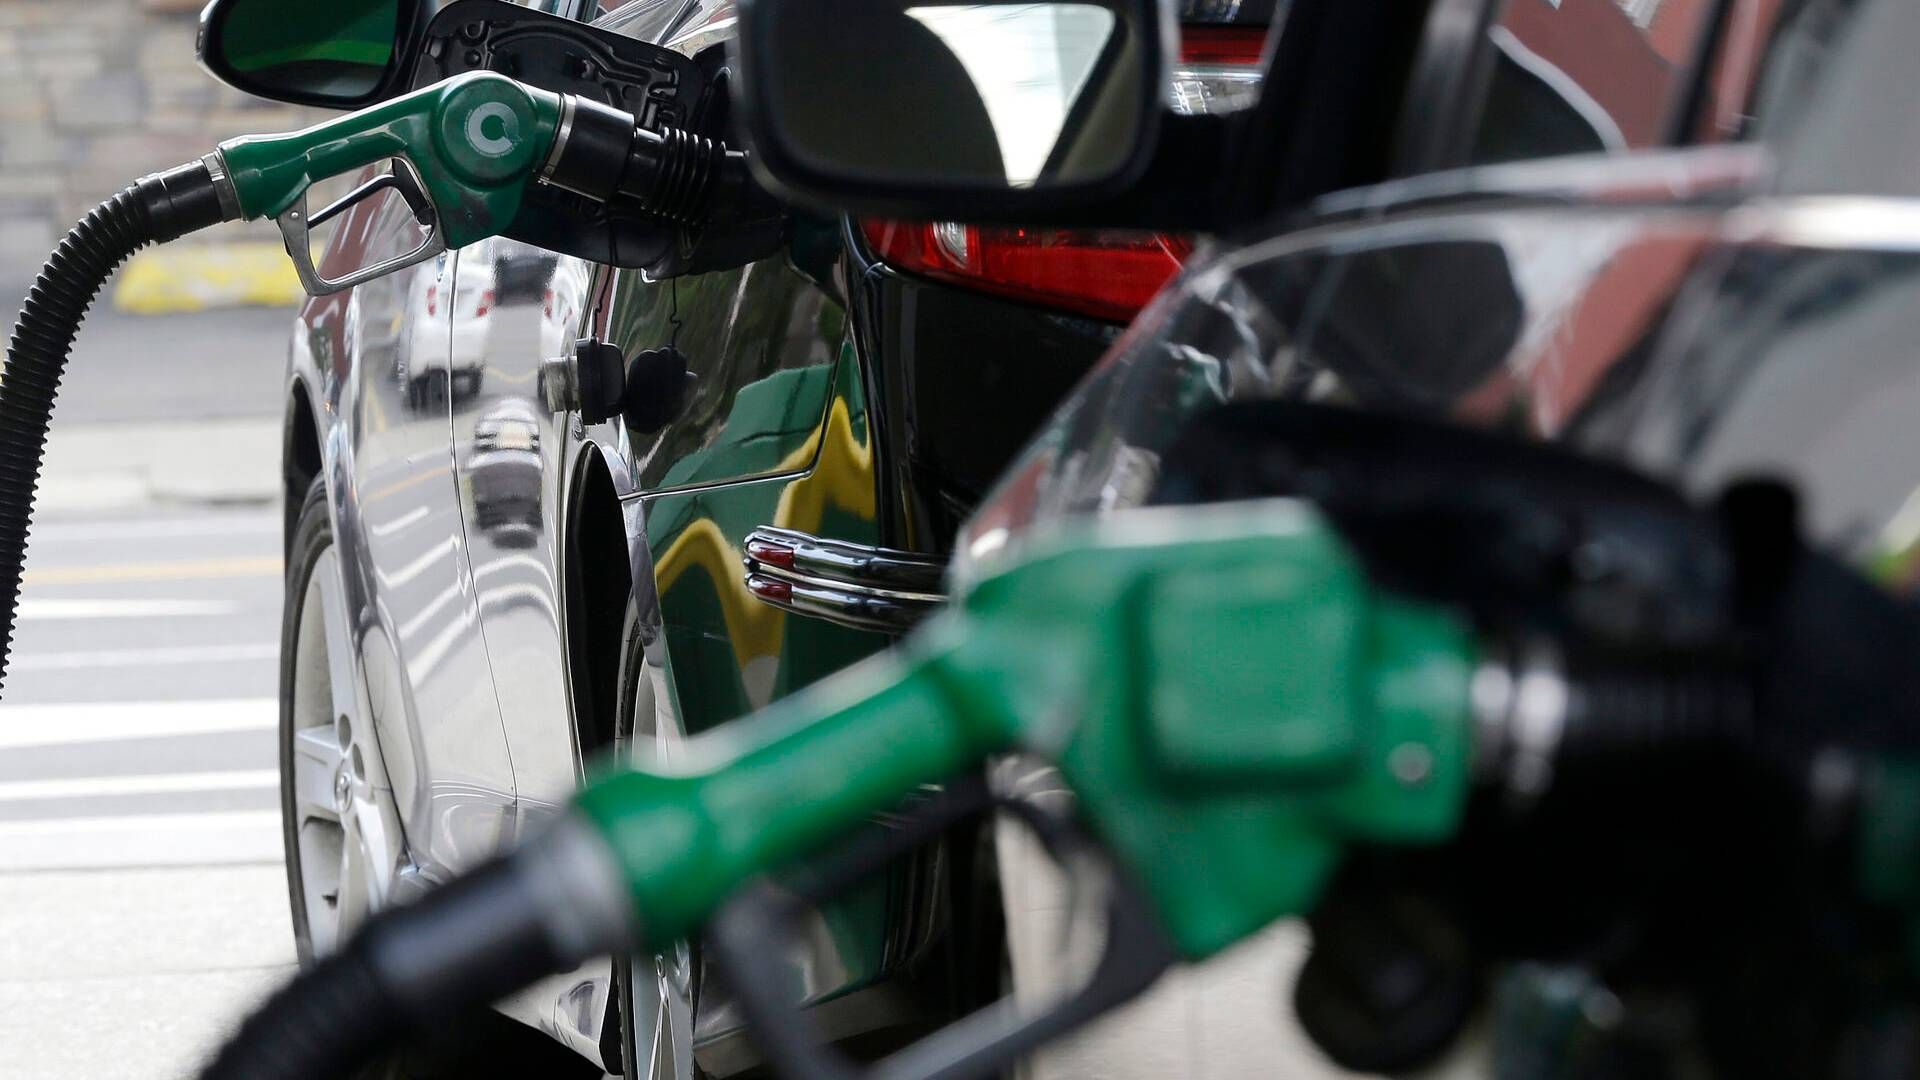 Oliepriserne har stor betydning for brændstofpriserne. | Foto: Julio Cortez/AP/Ritzau Scanpix